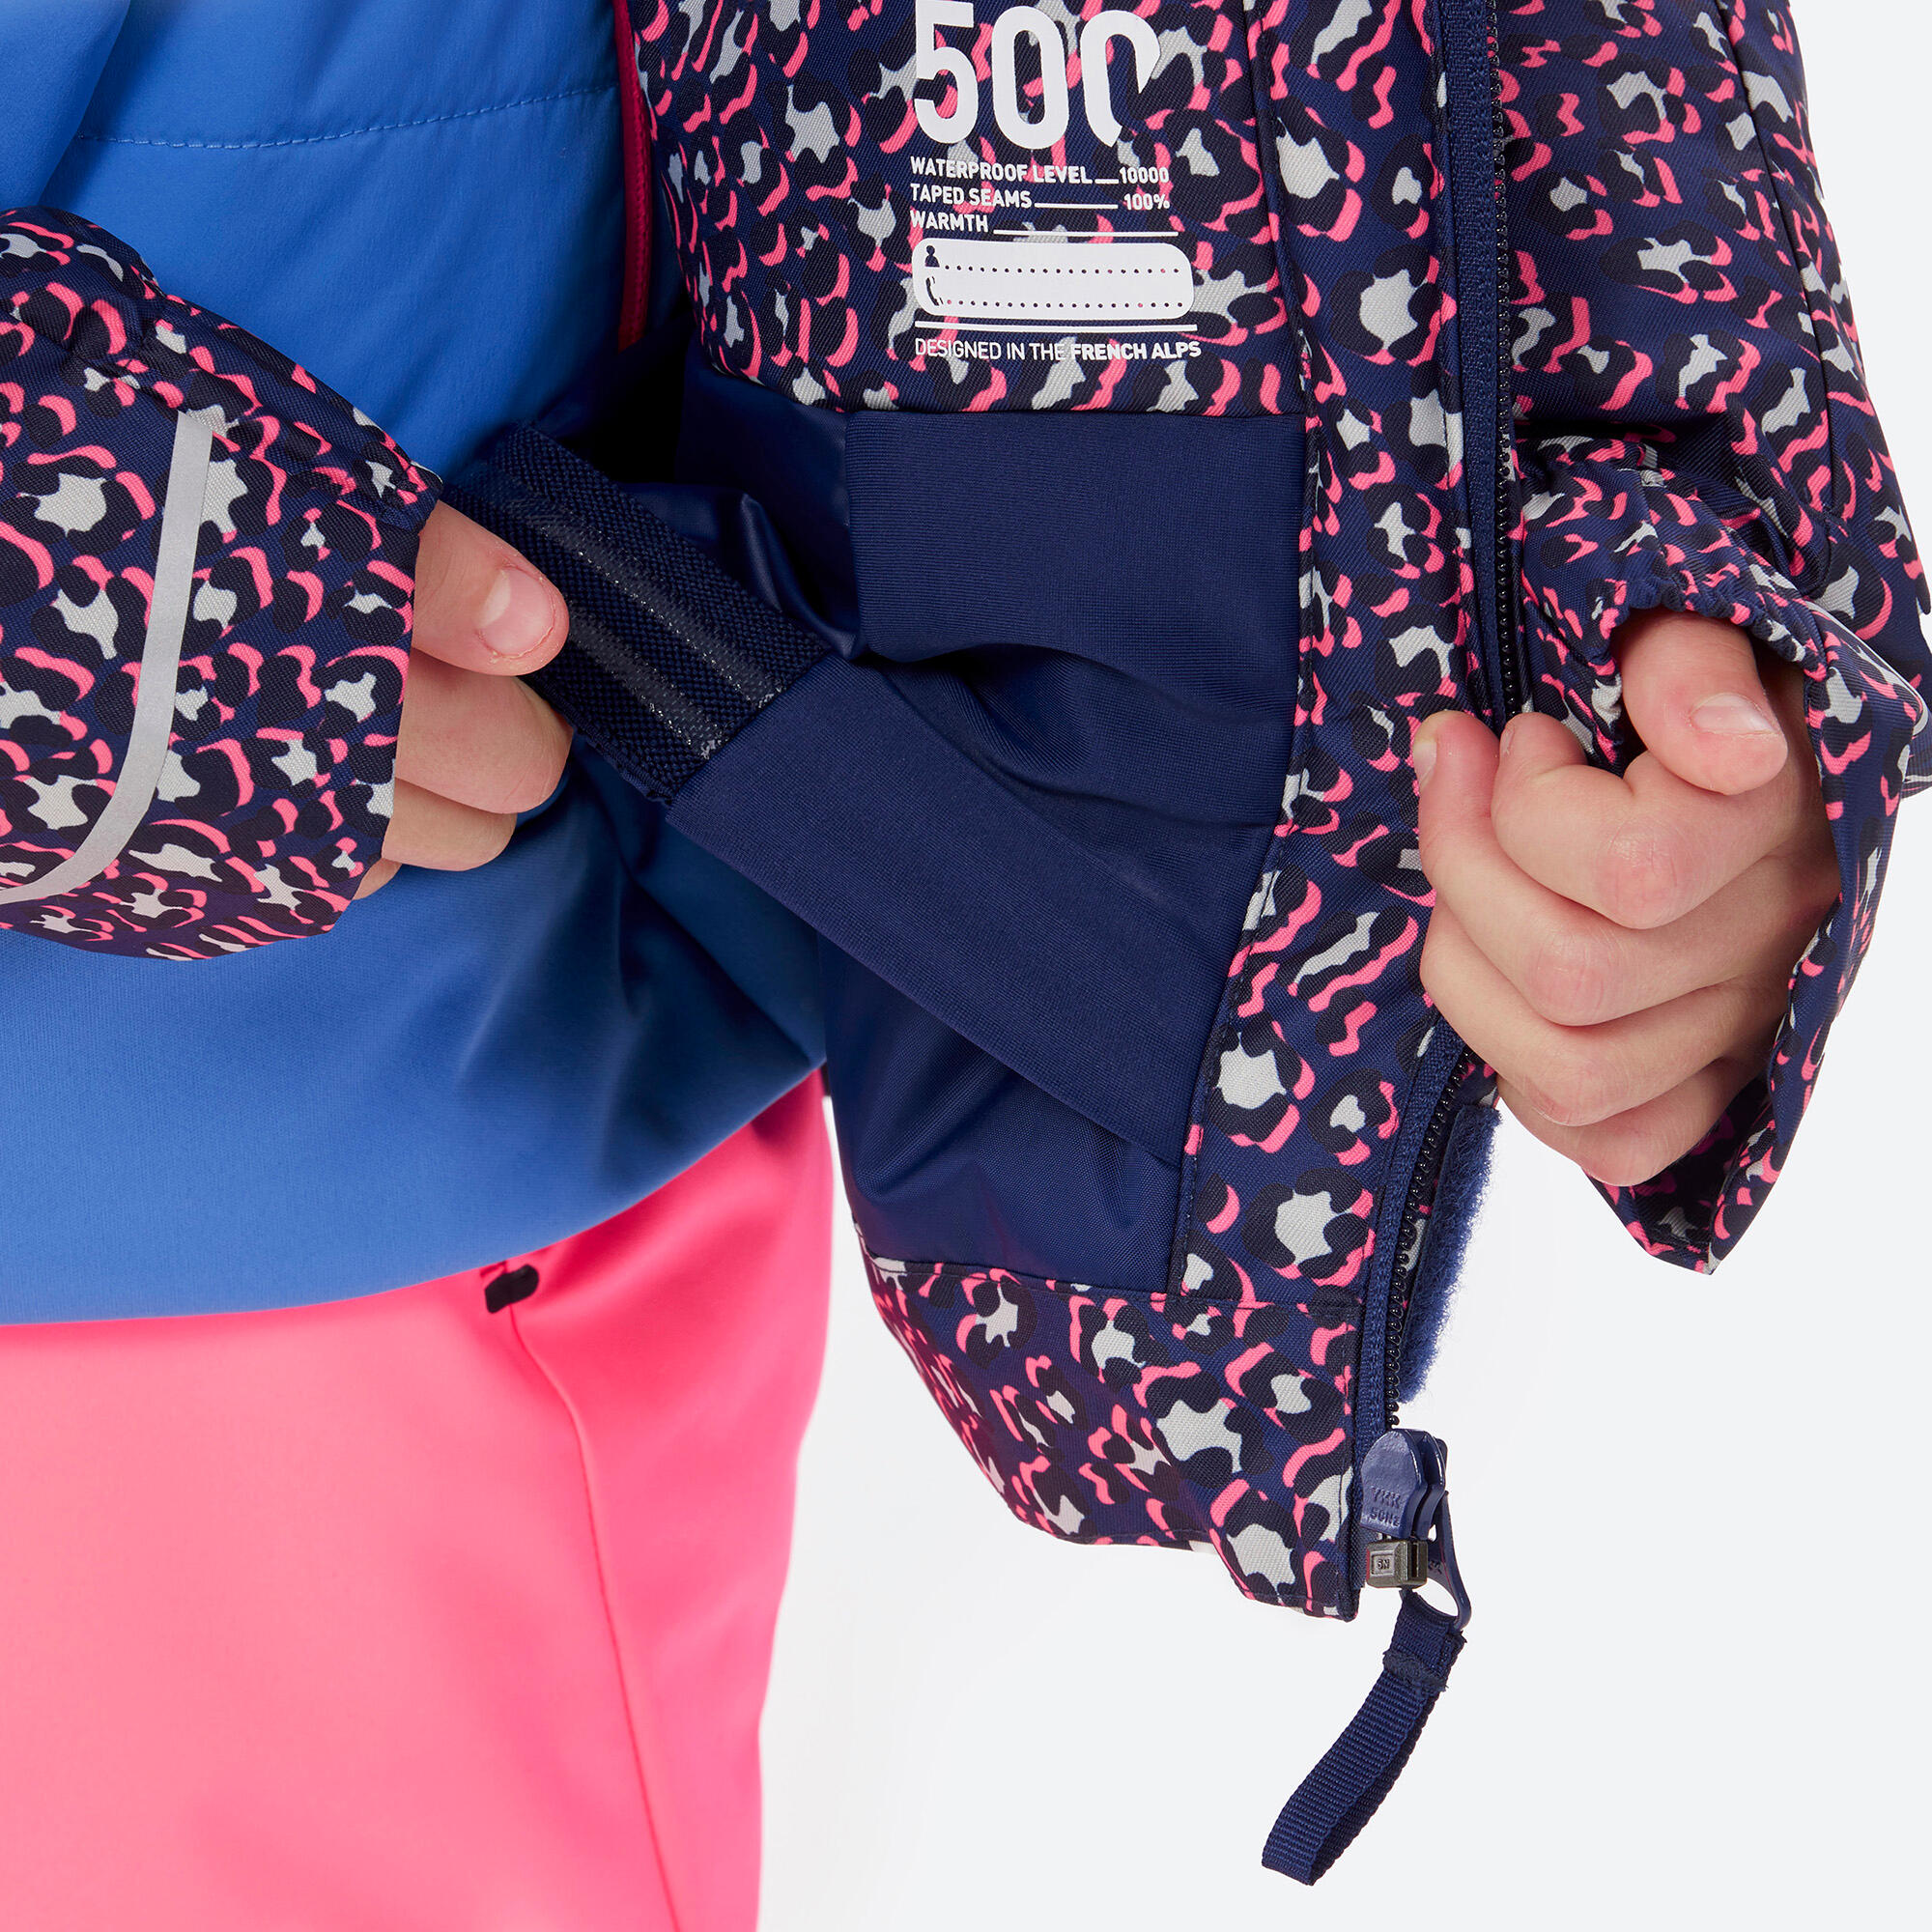 Kids’ Warm and Waterproof Ski Jacket 500 - Leopard Print 8/10